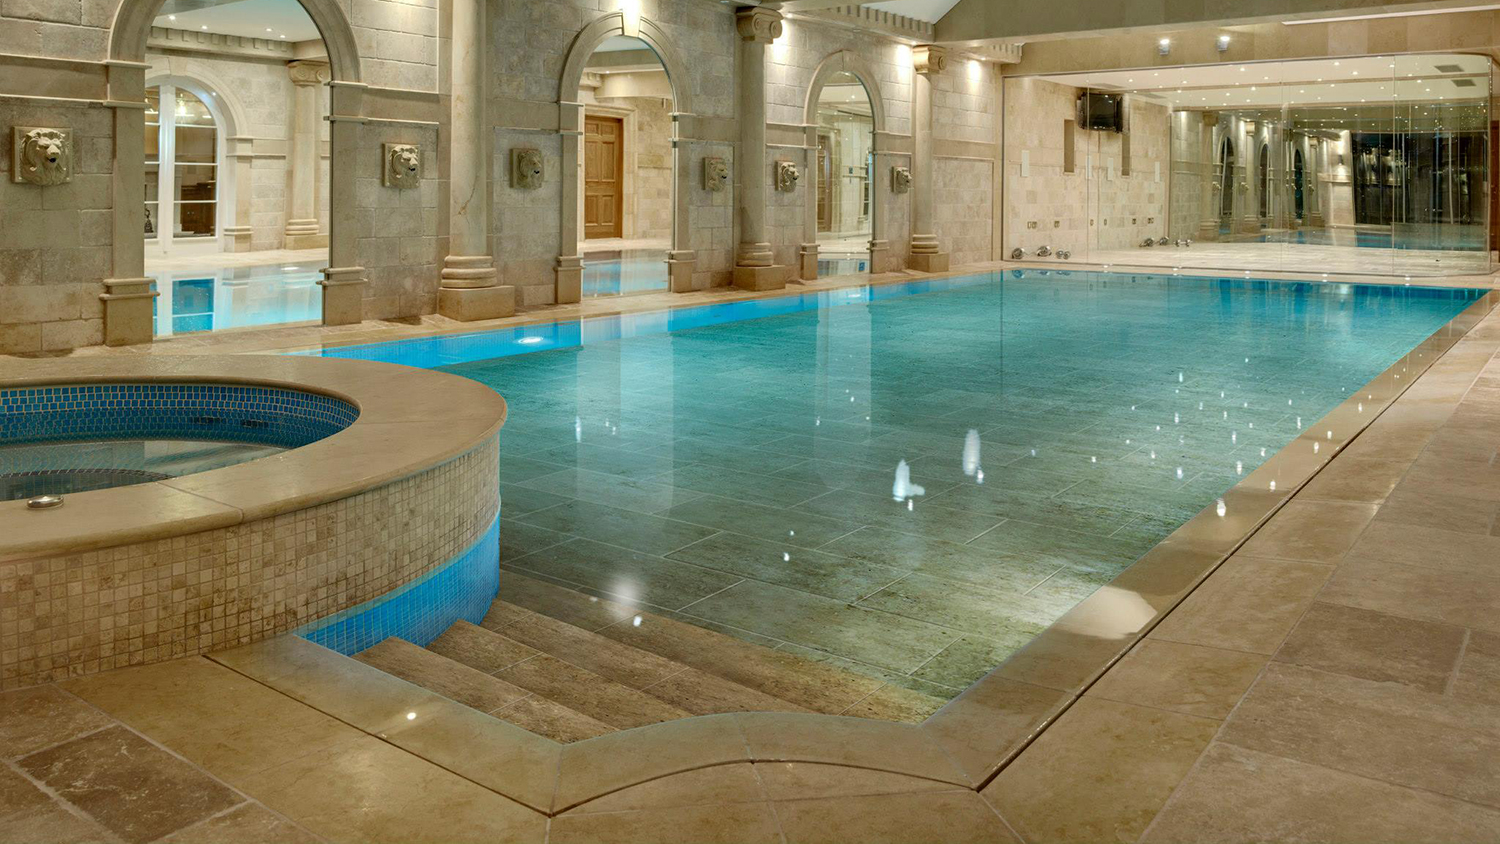 hydro floors raise and lower to make hidden swimming pools hydrofloors 005